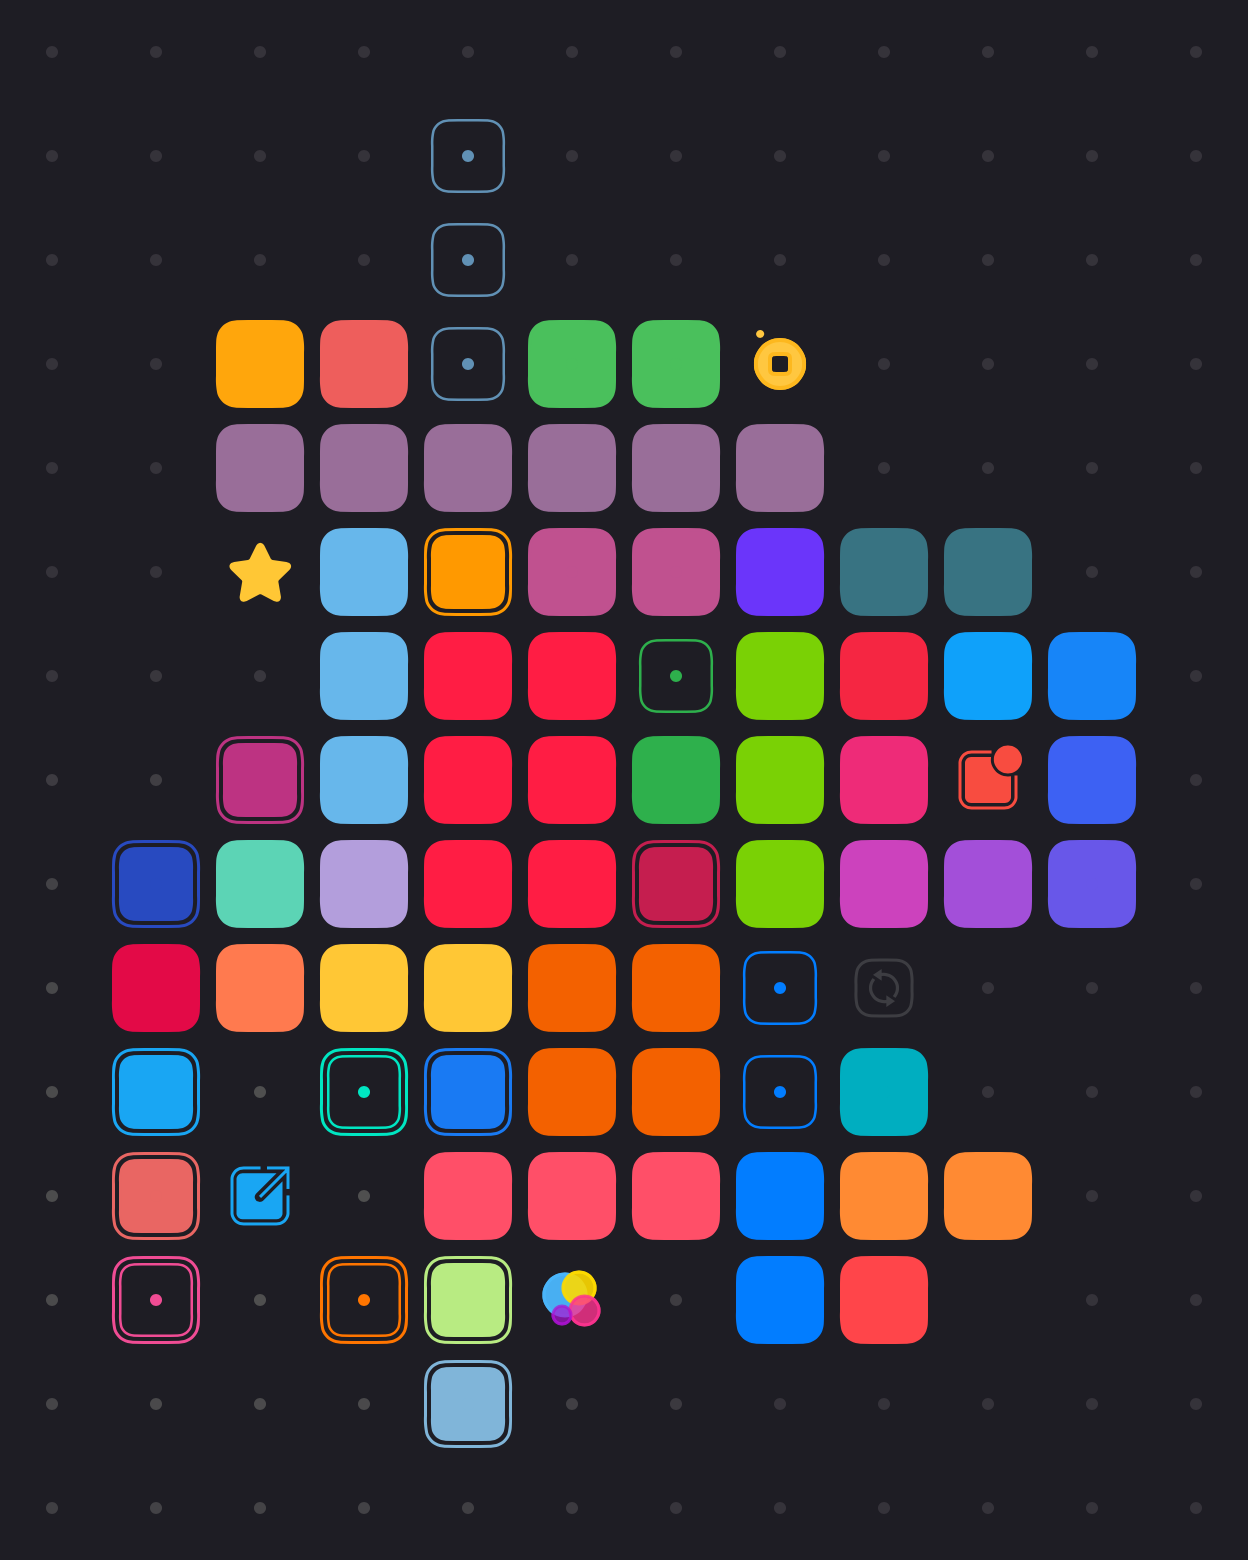 BLACKBOX app for iPhone. Fun puzzle games, Game design, Game inspiration